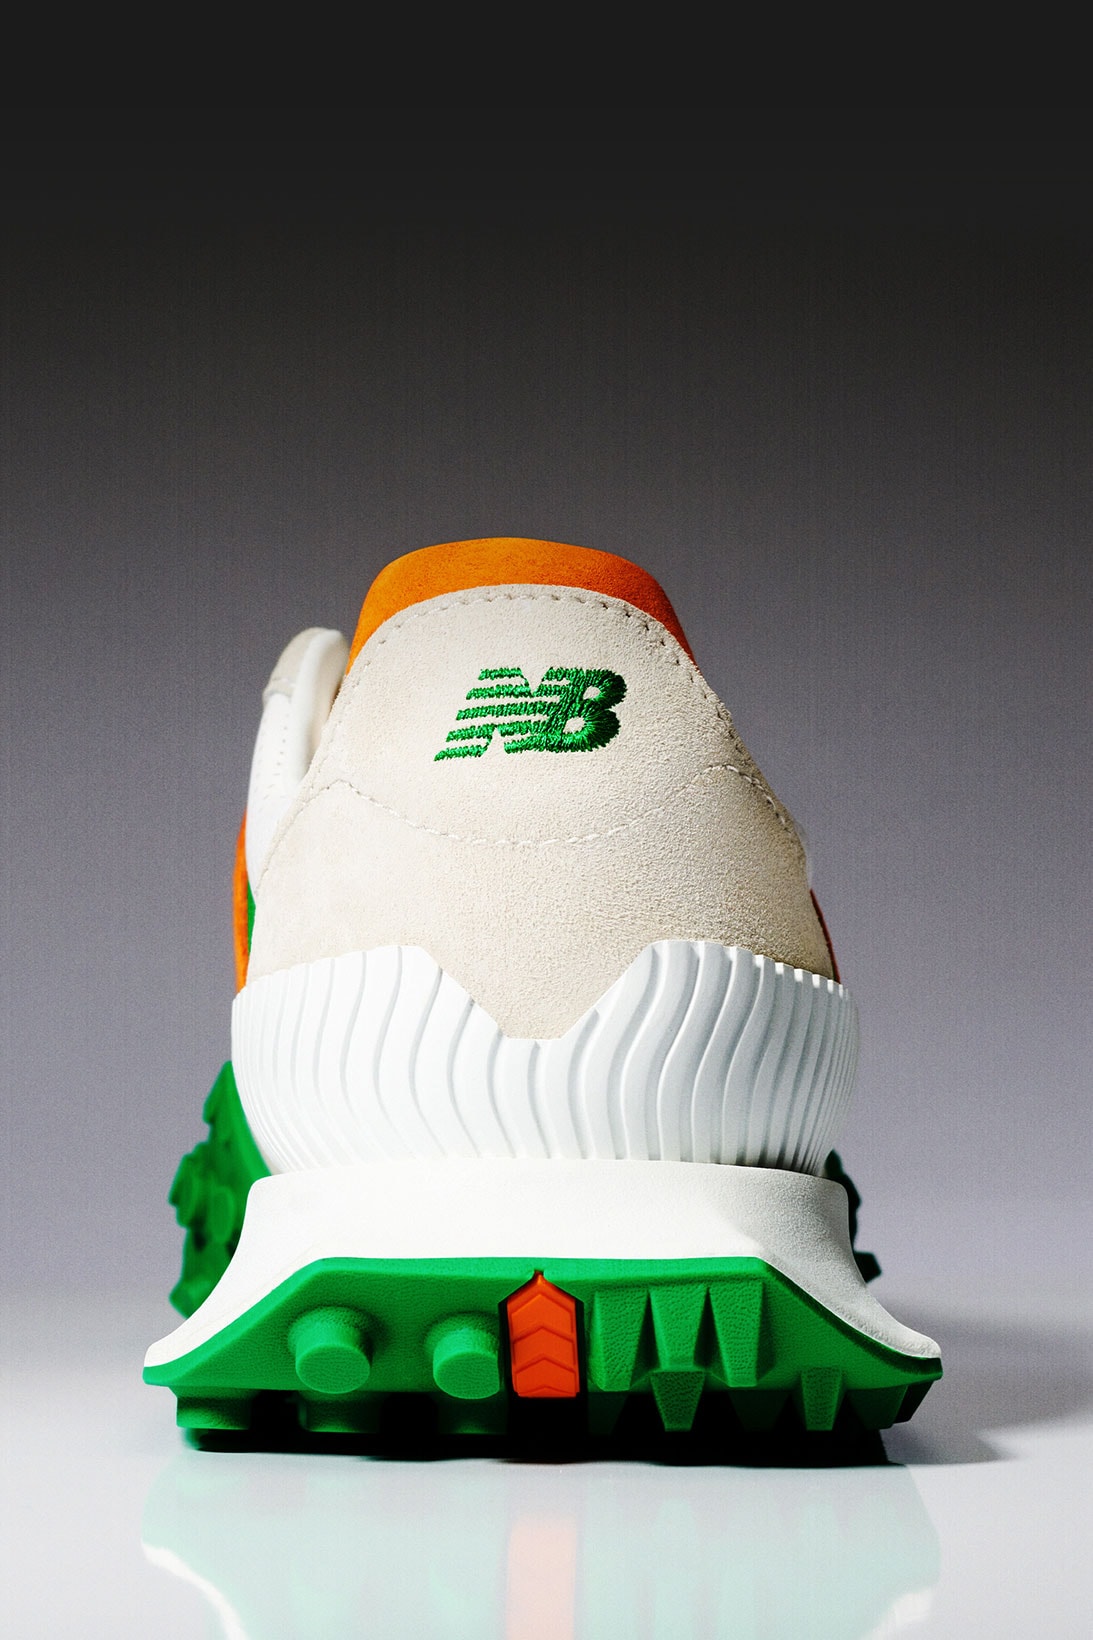 Casablanca New Balance NB XC-72 Sneakers Collaboration White Green Heel Logo Details